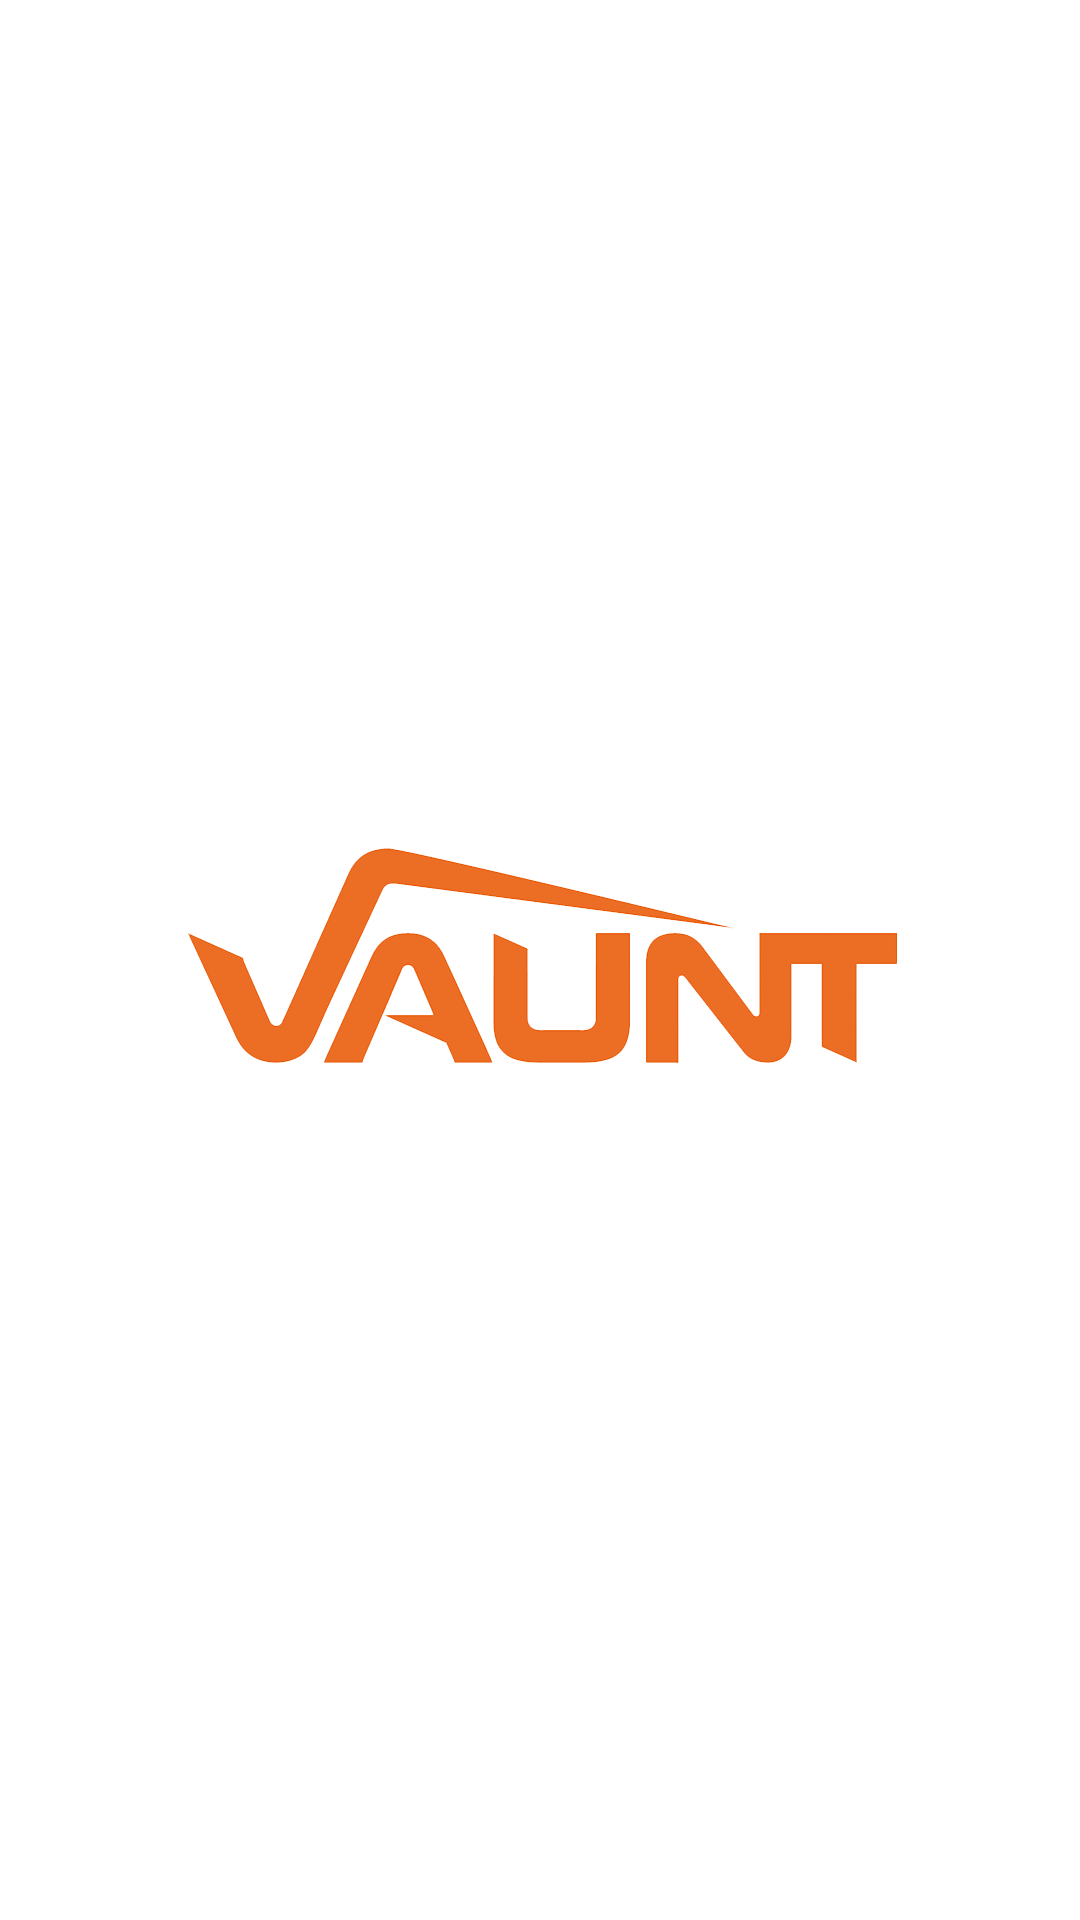 Image of the Vaunt Brand Logo